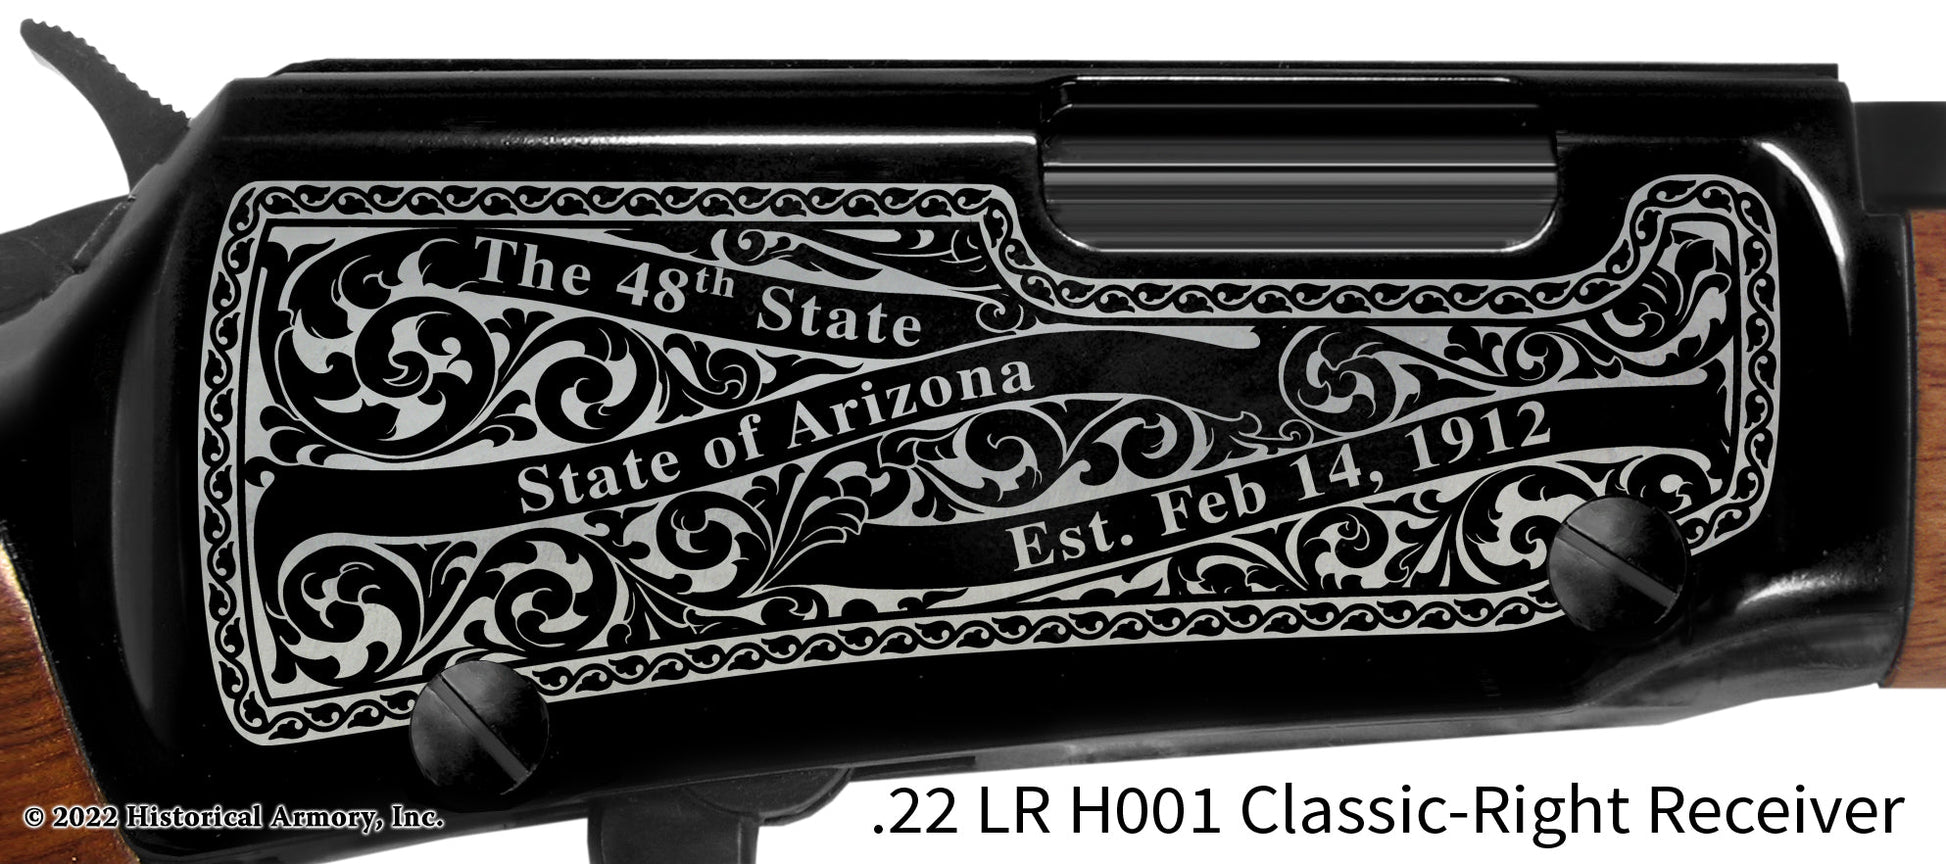 Pinal County Arizona Engraved Henry H001 Rifle